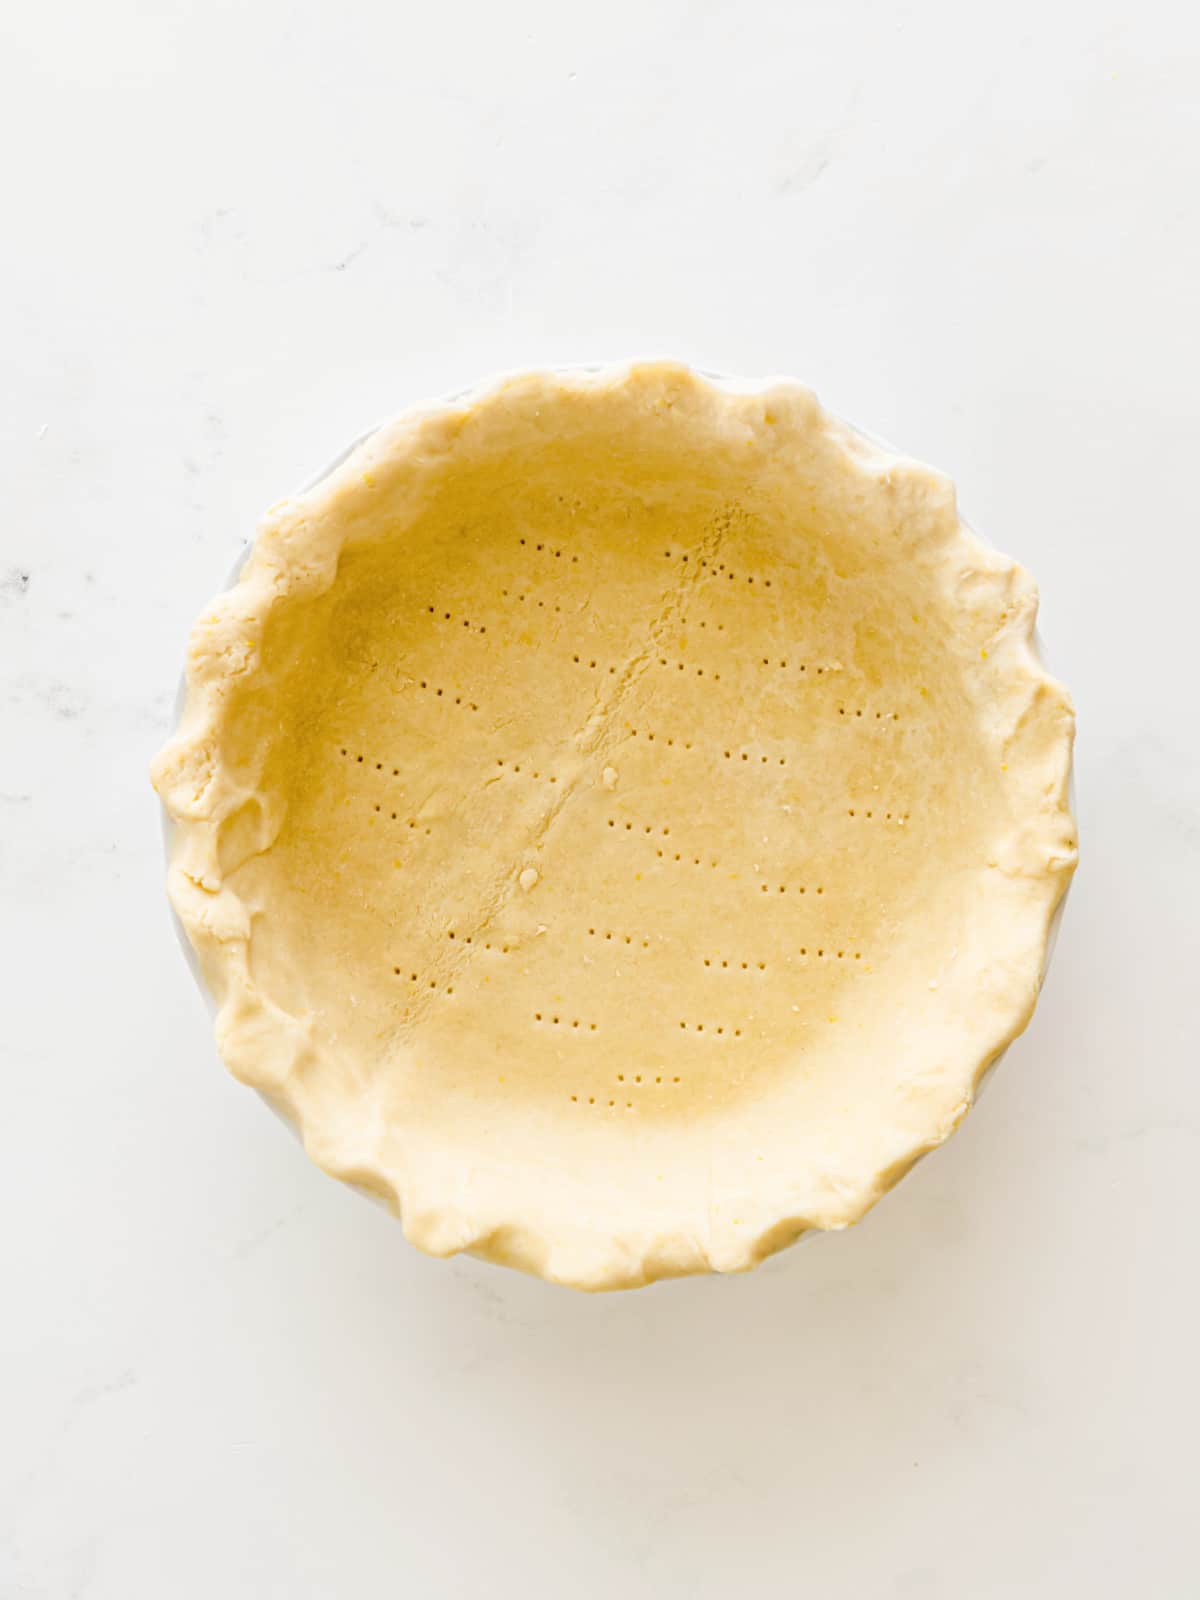 pie crust in pie plate